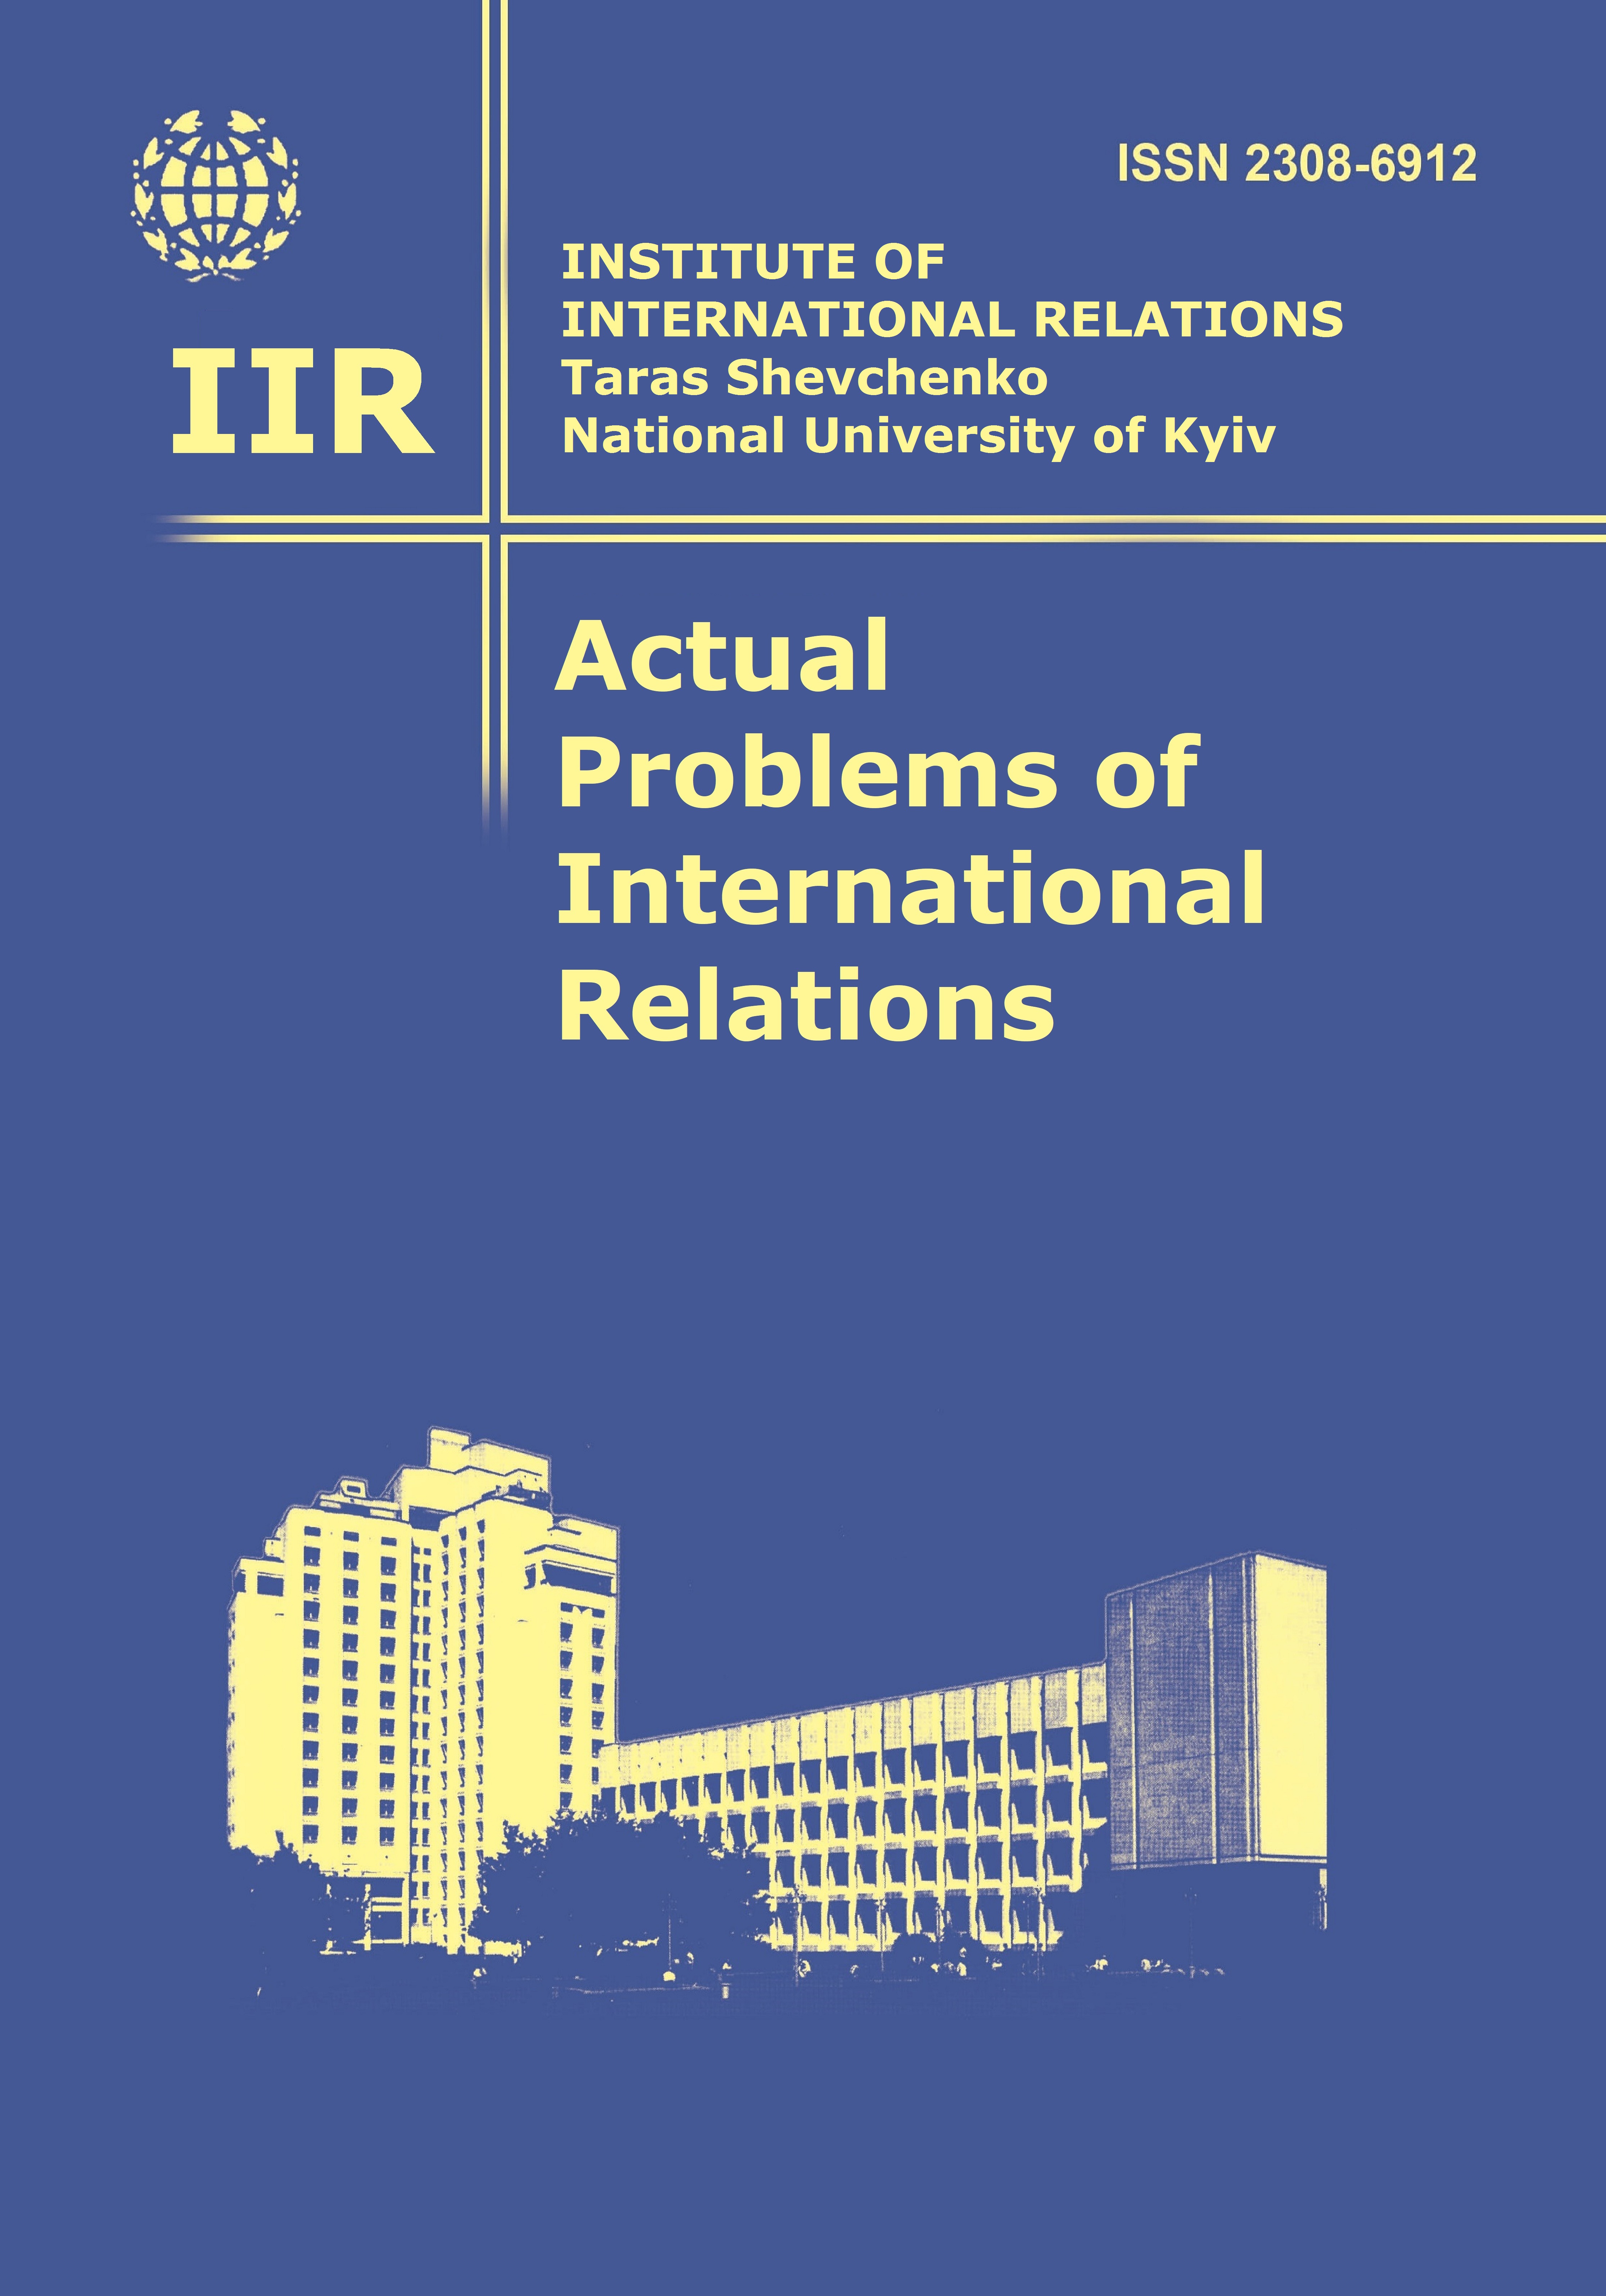 Logo of the Institute of International Relations Taras Shevchenko Kyiv National University